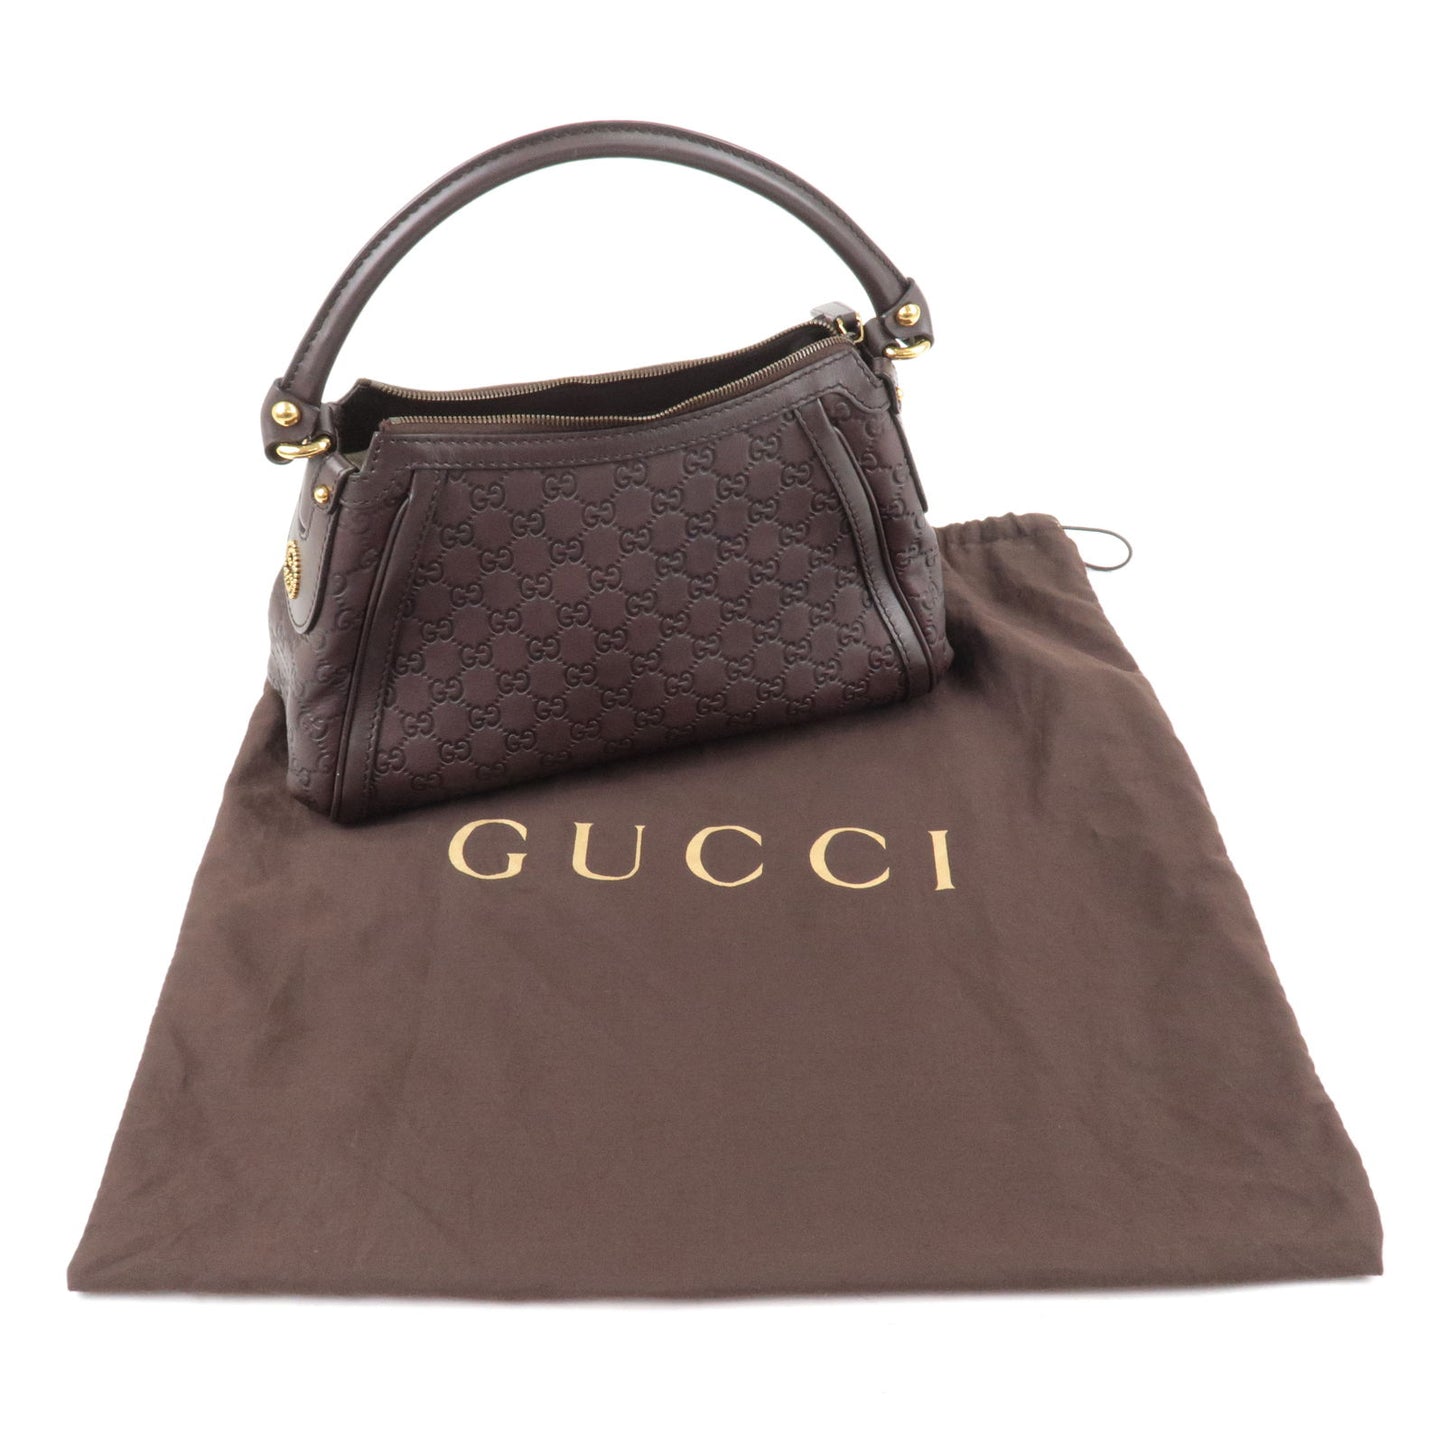 GUCCI Scarlett Guccissima Leather Shoulder Bag Brown 282298